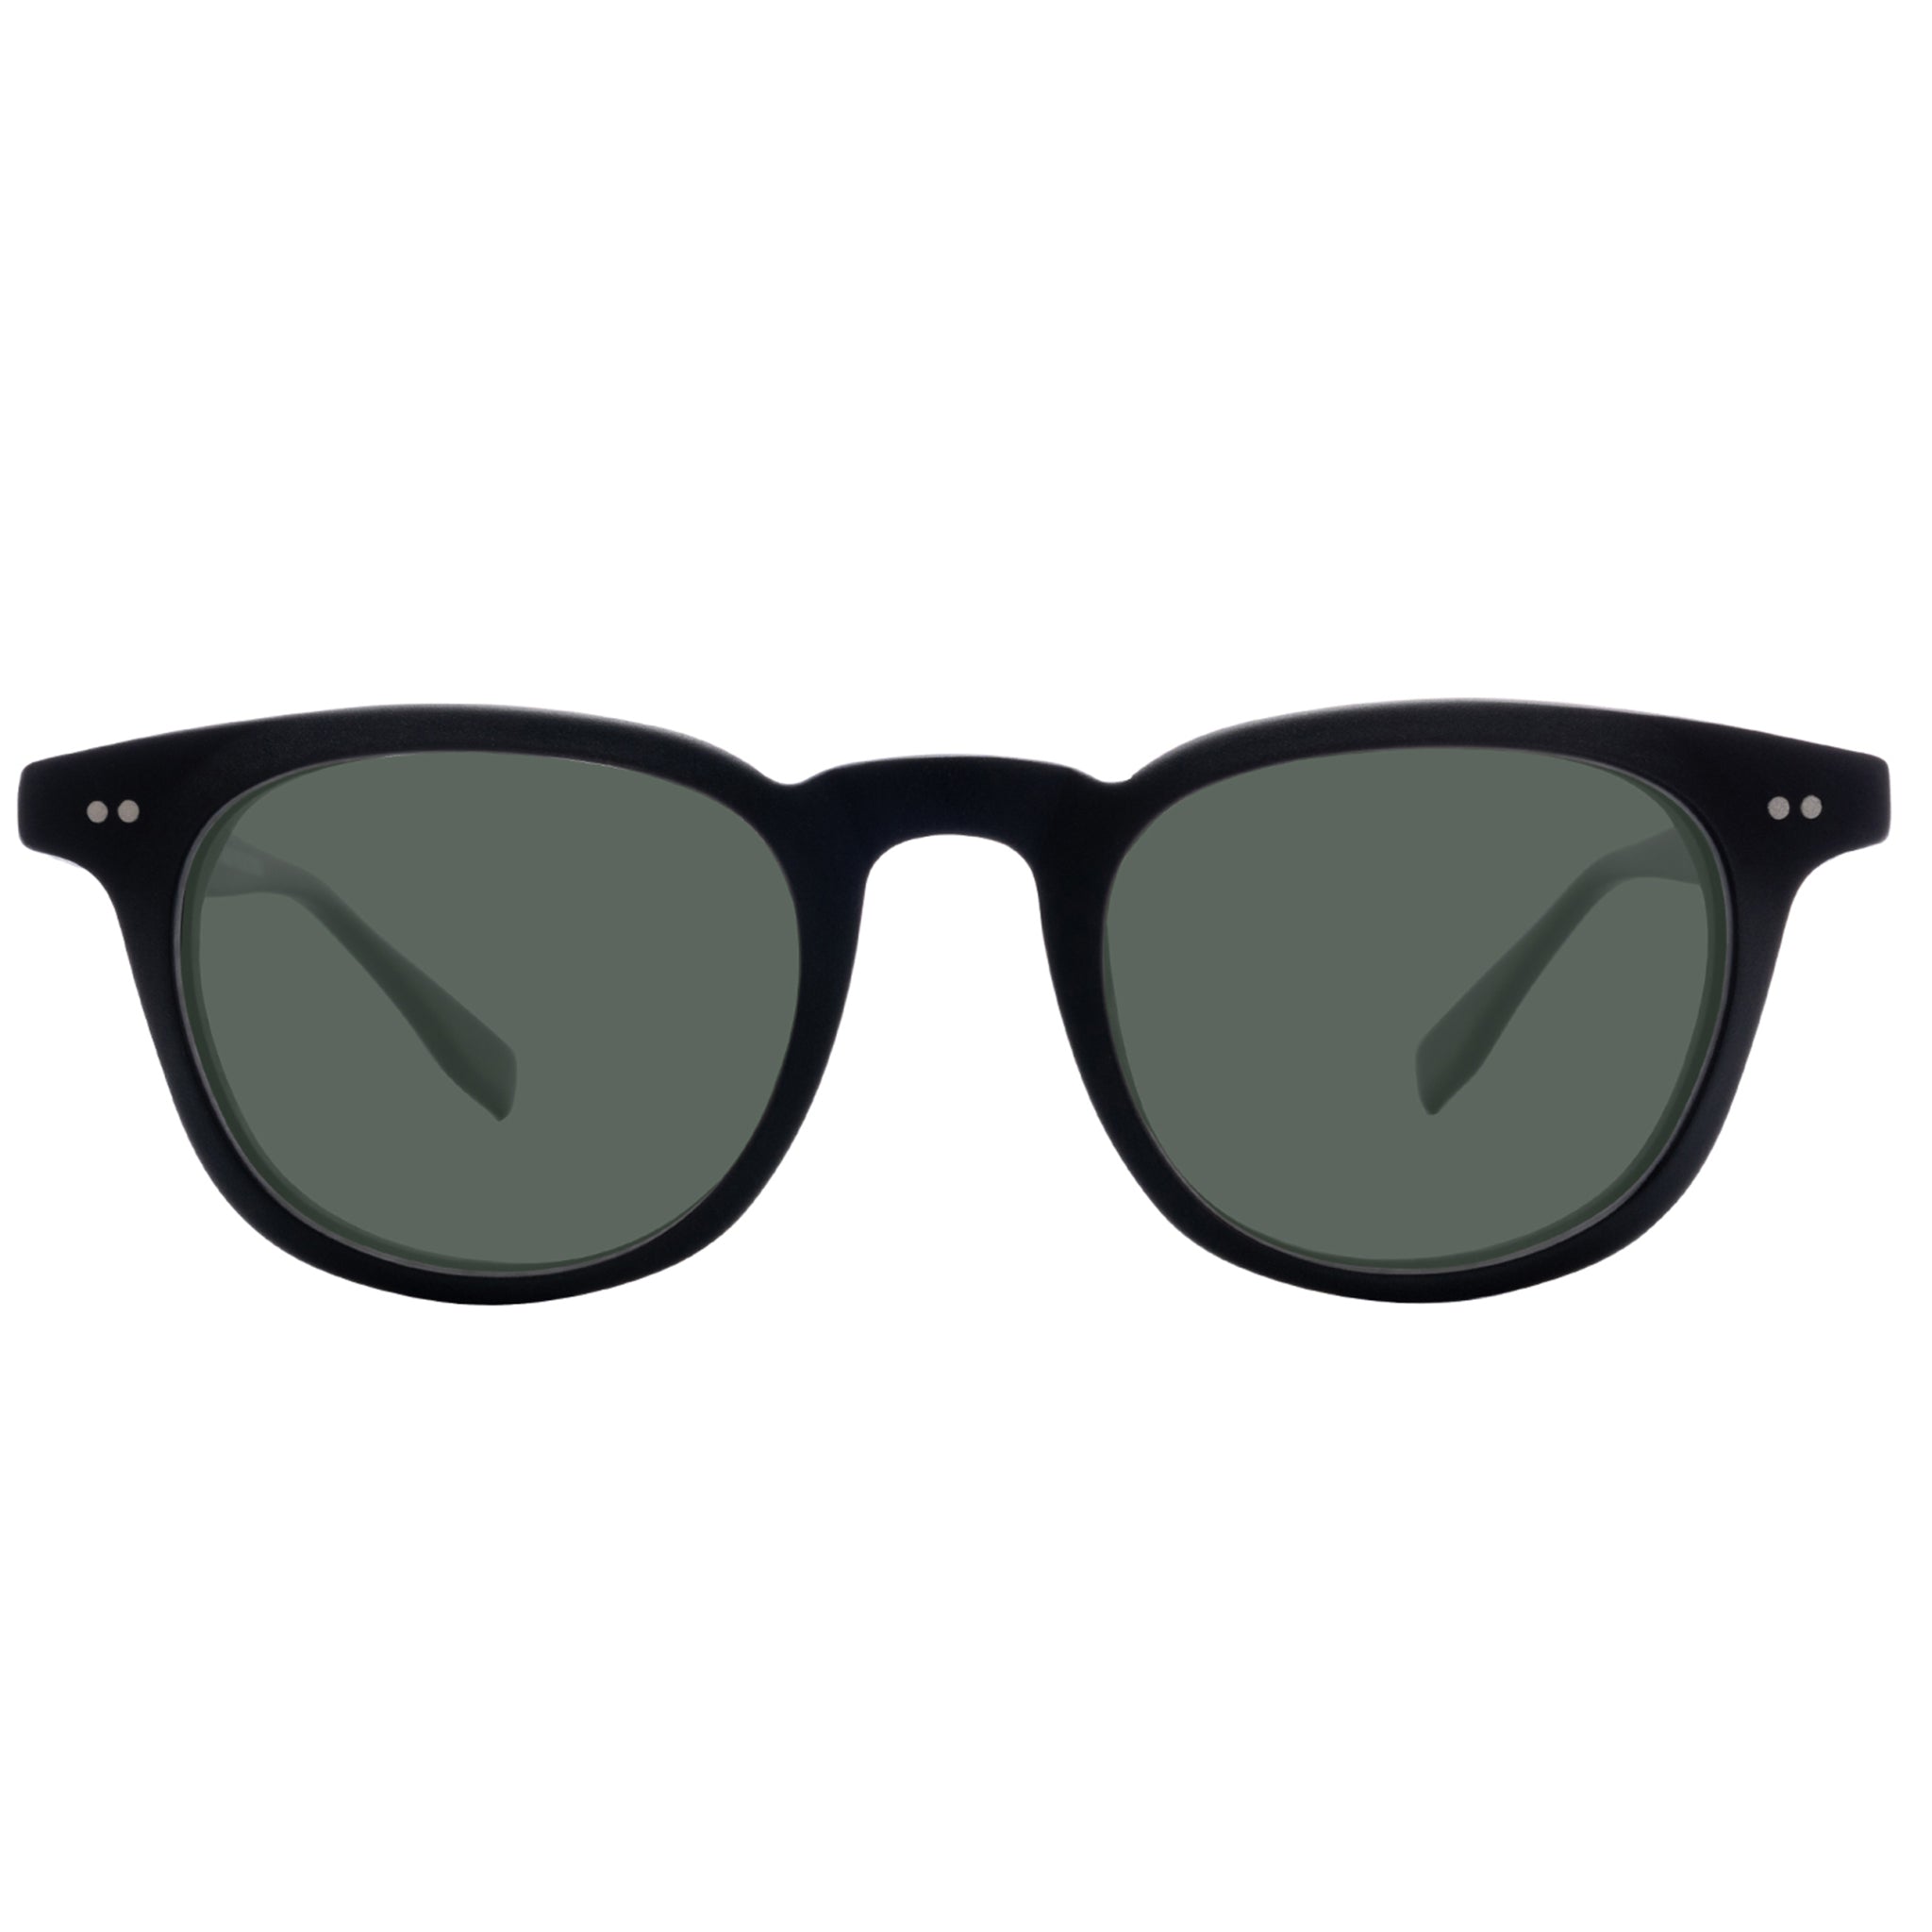 L&F &2 | Polarized Sunglasses | Matte Black